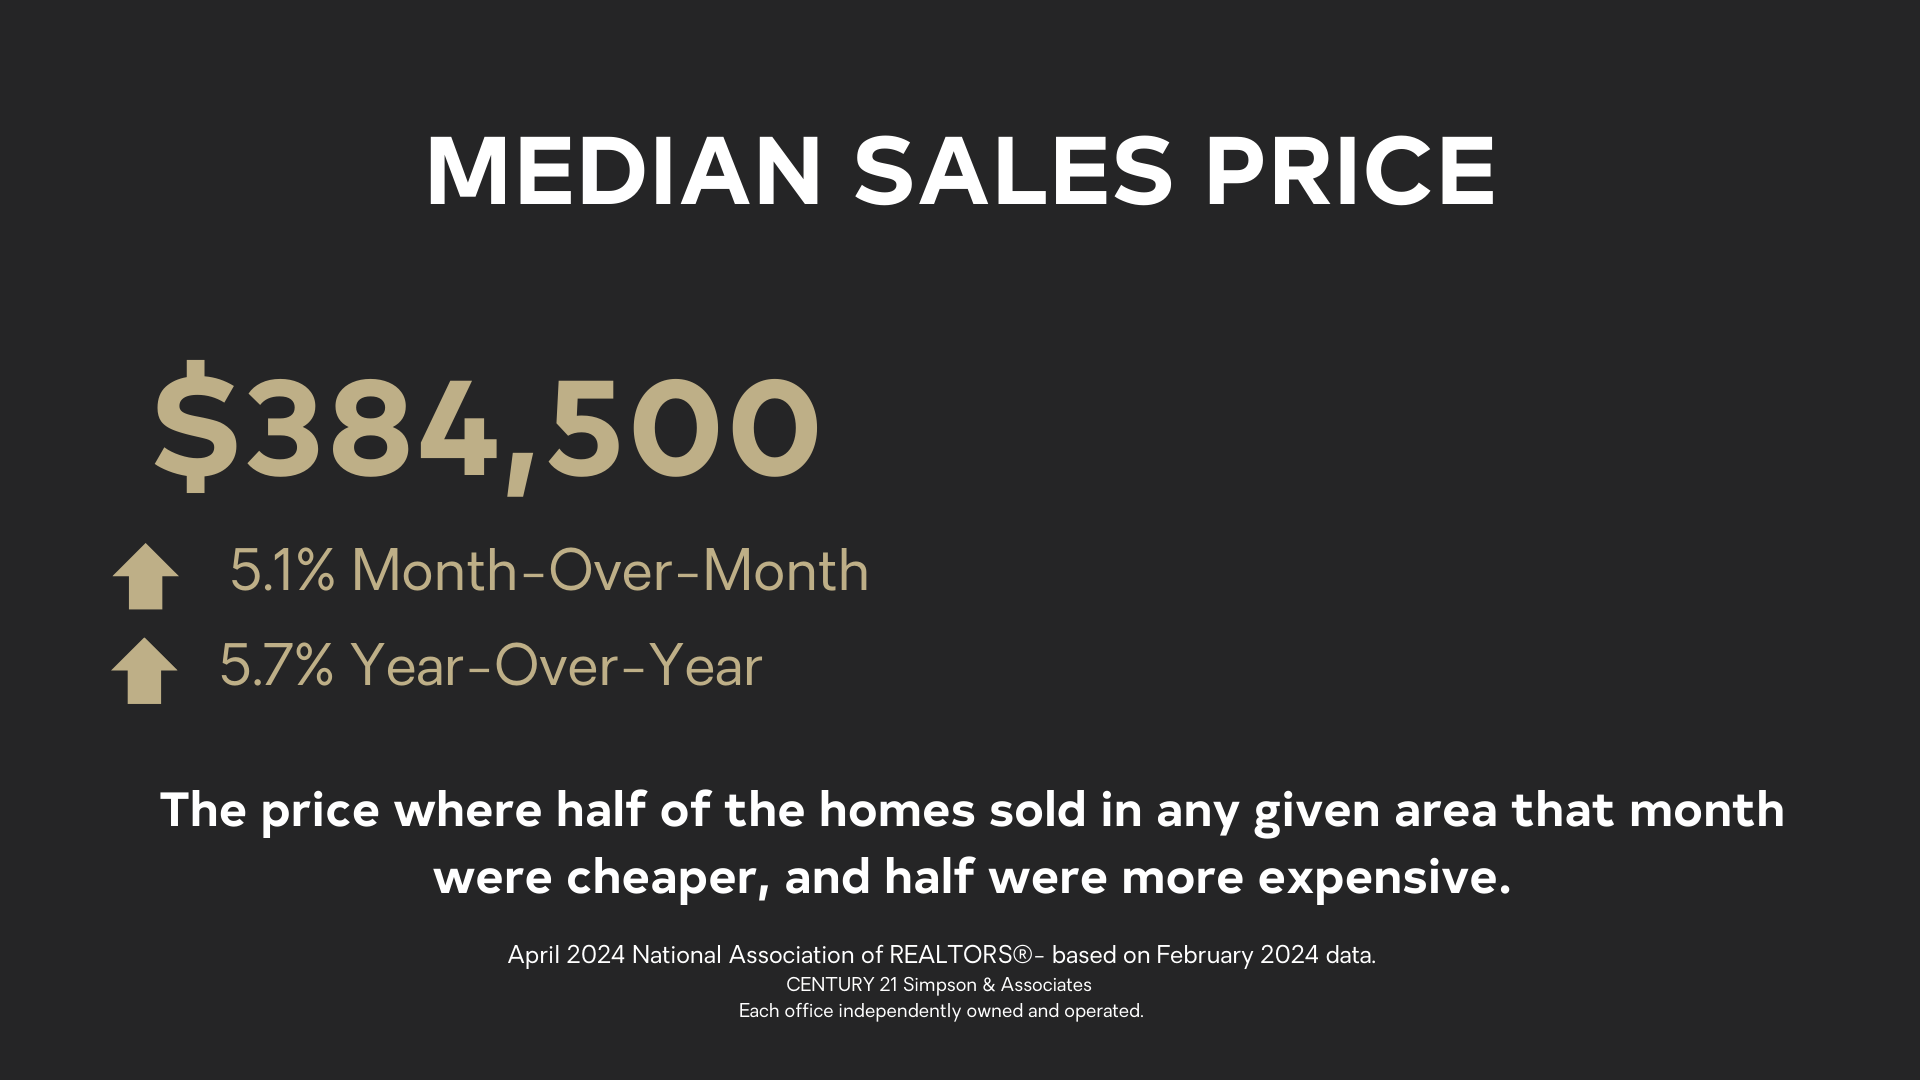 Apr '24 Median Sales Price